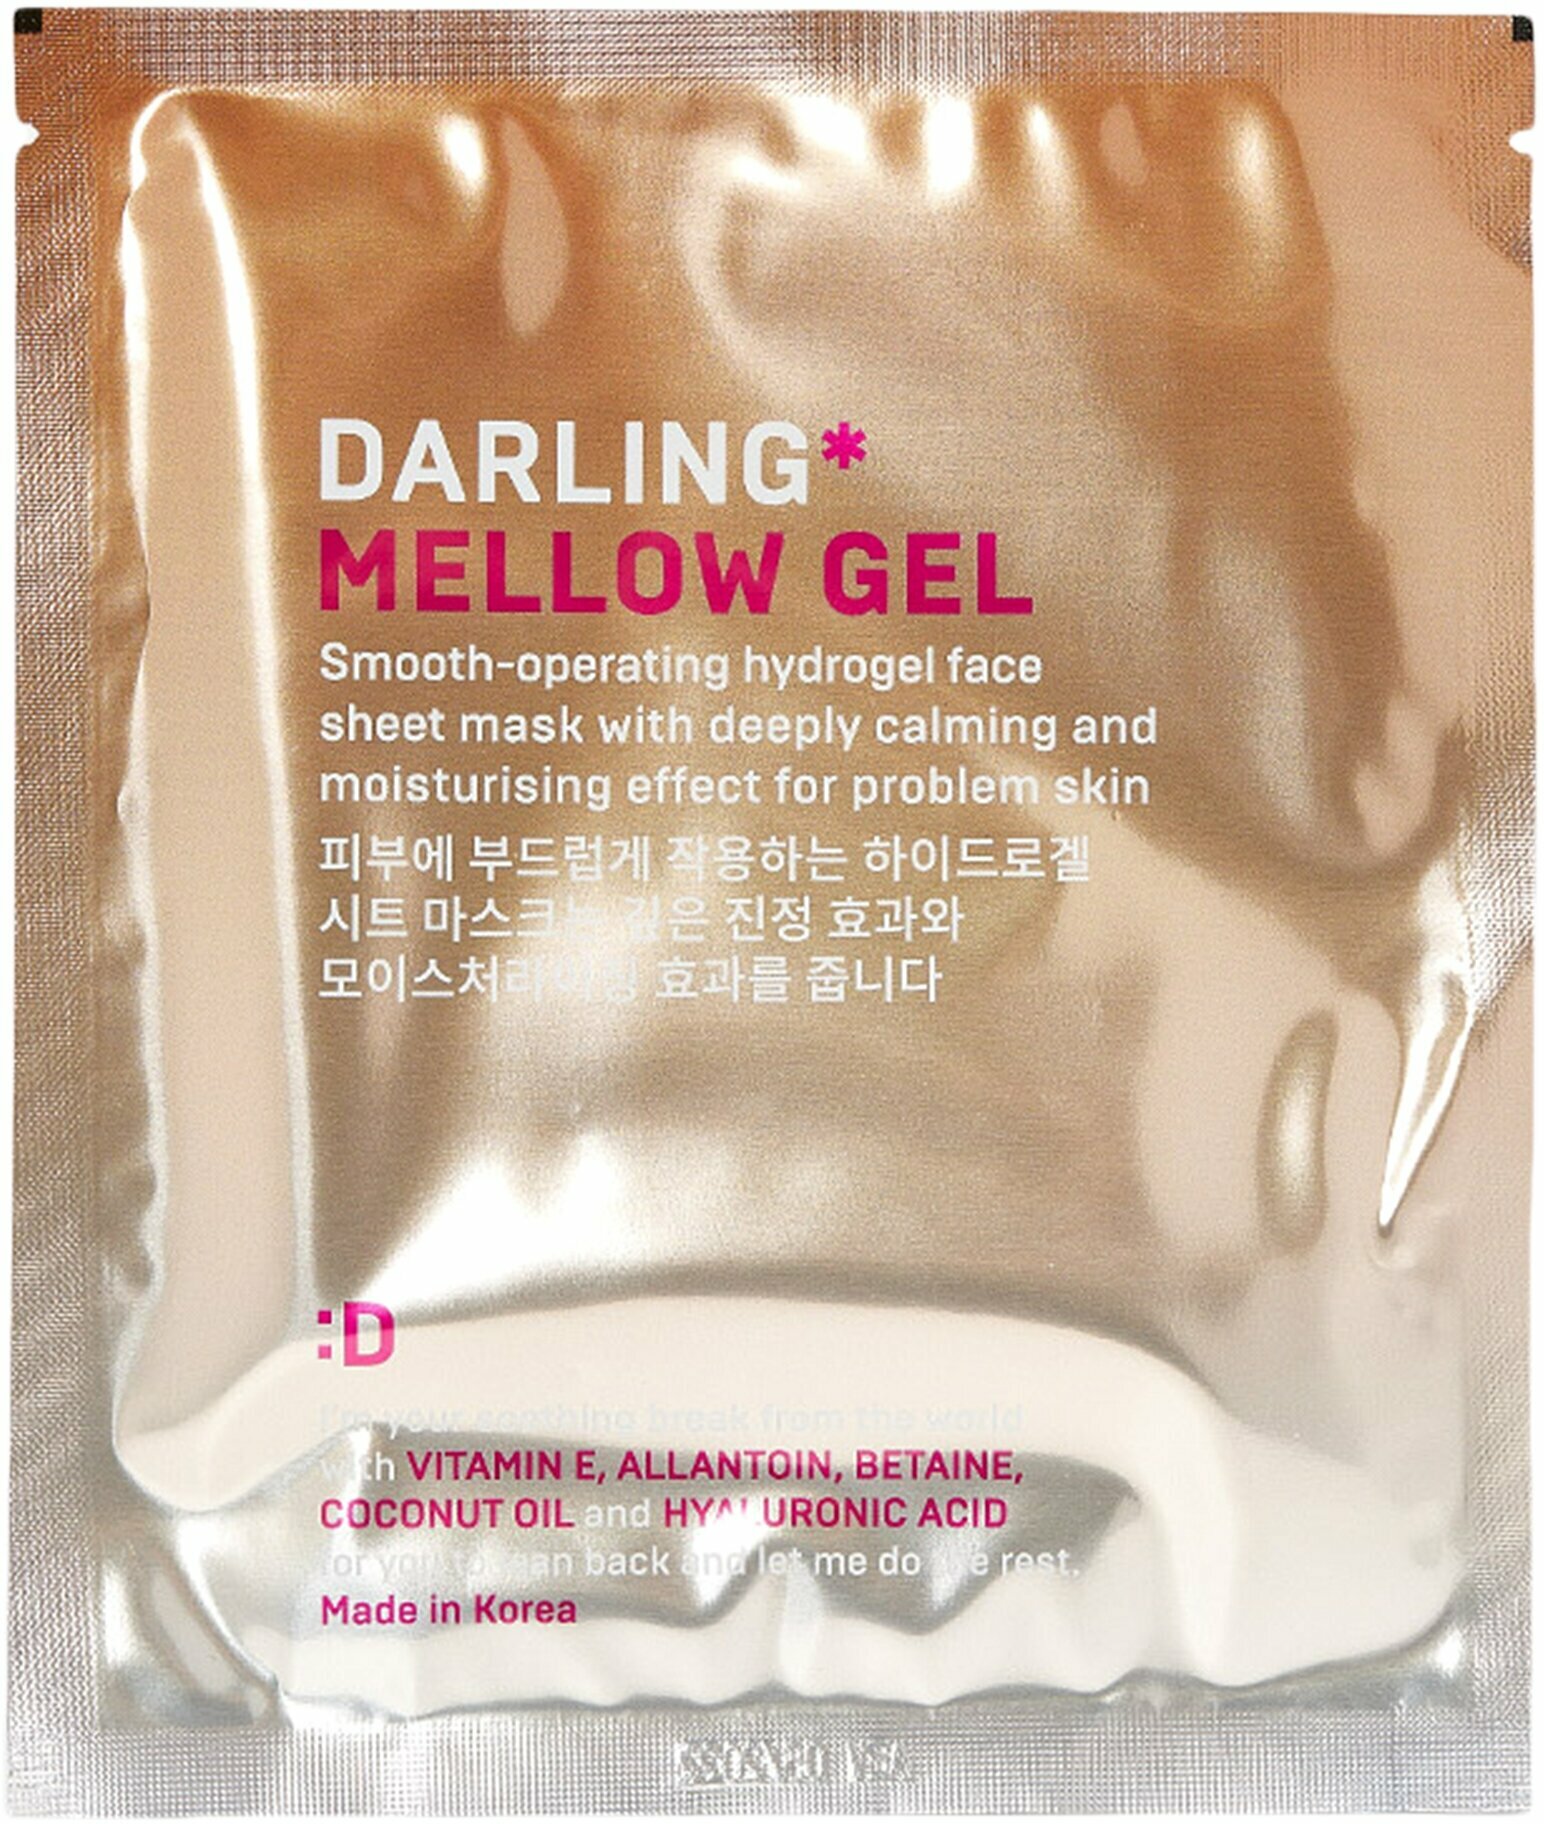 Darling Маска-желе для проблемной кожи, Mellow gel smoothe-operating hydrogel mask 1 шт